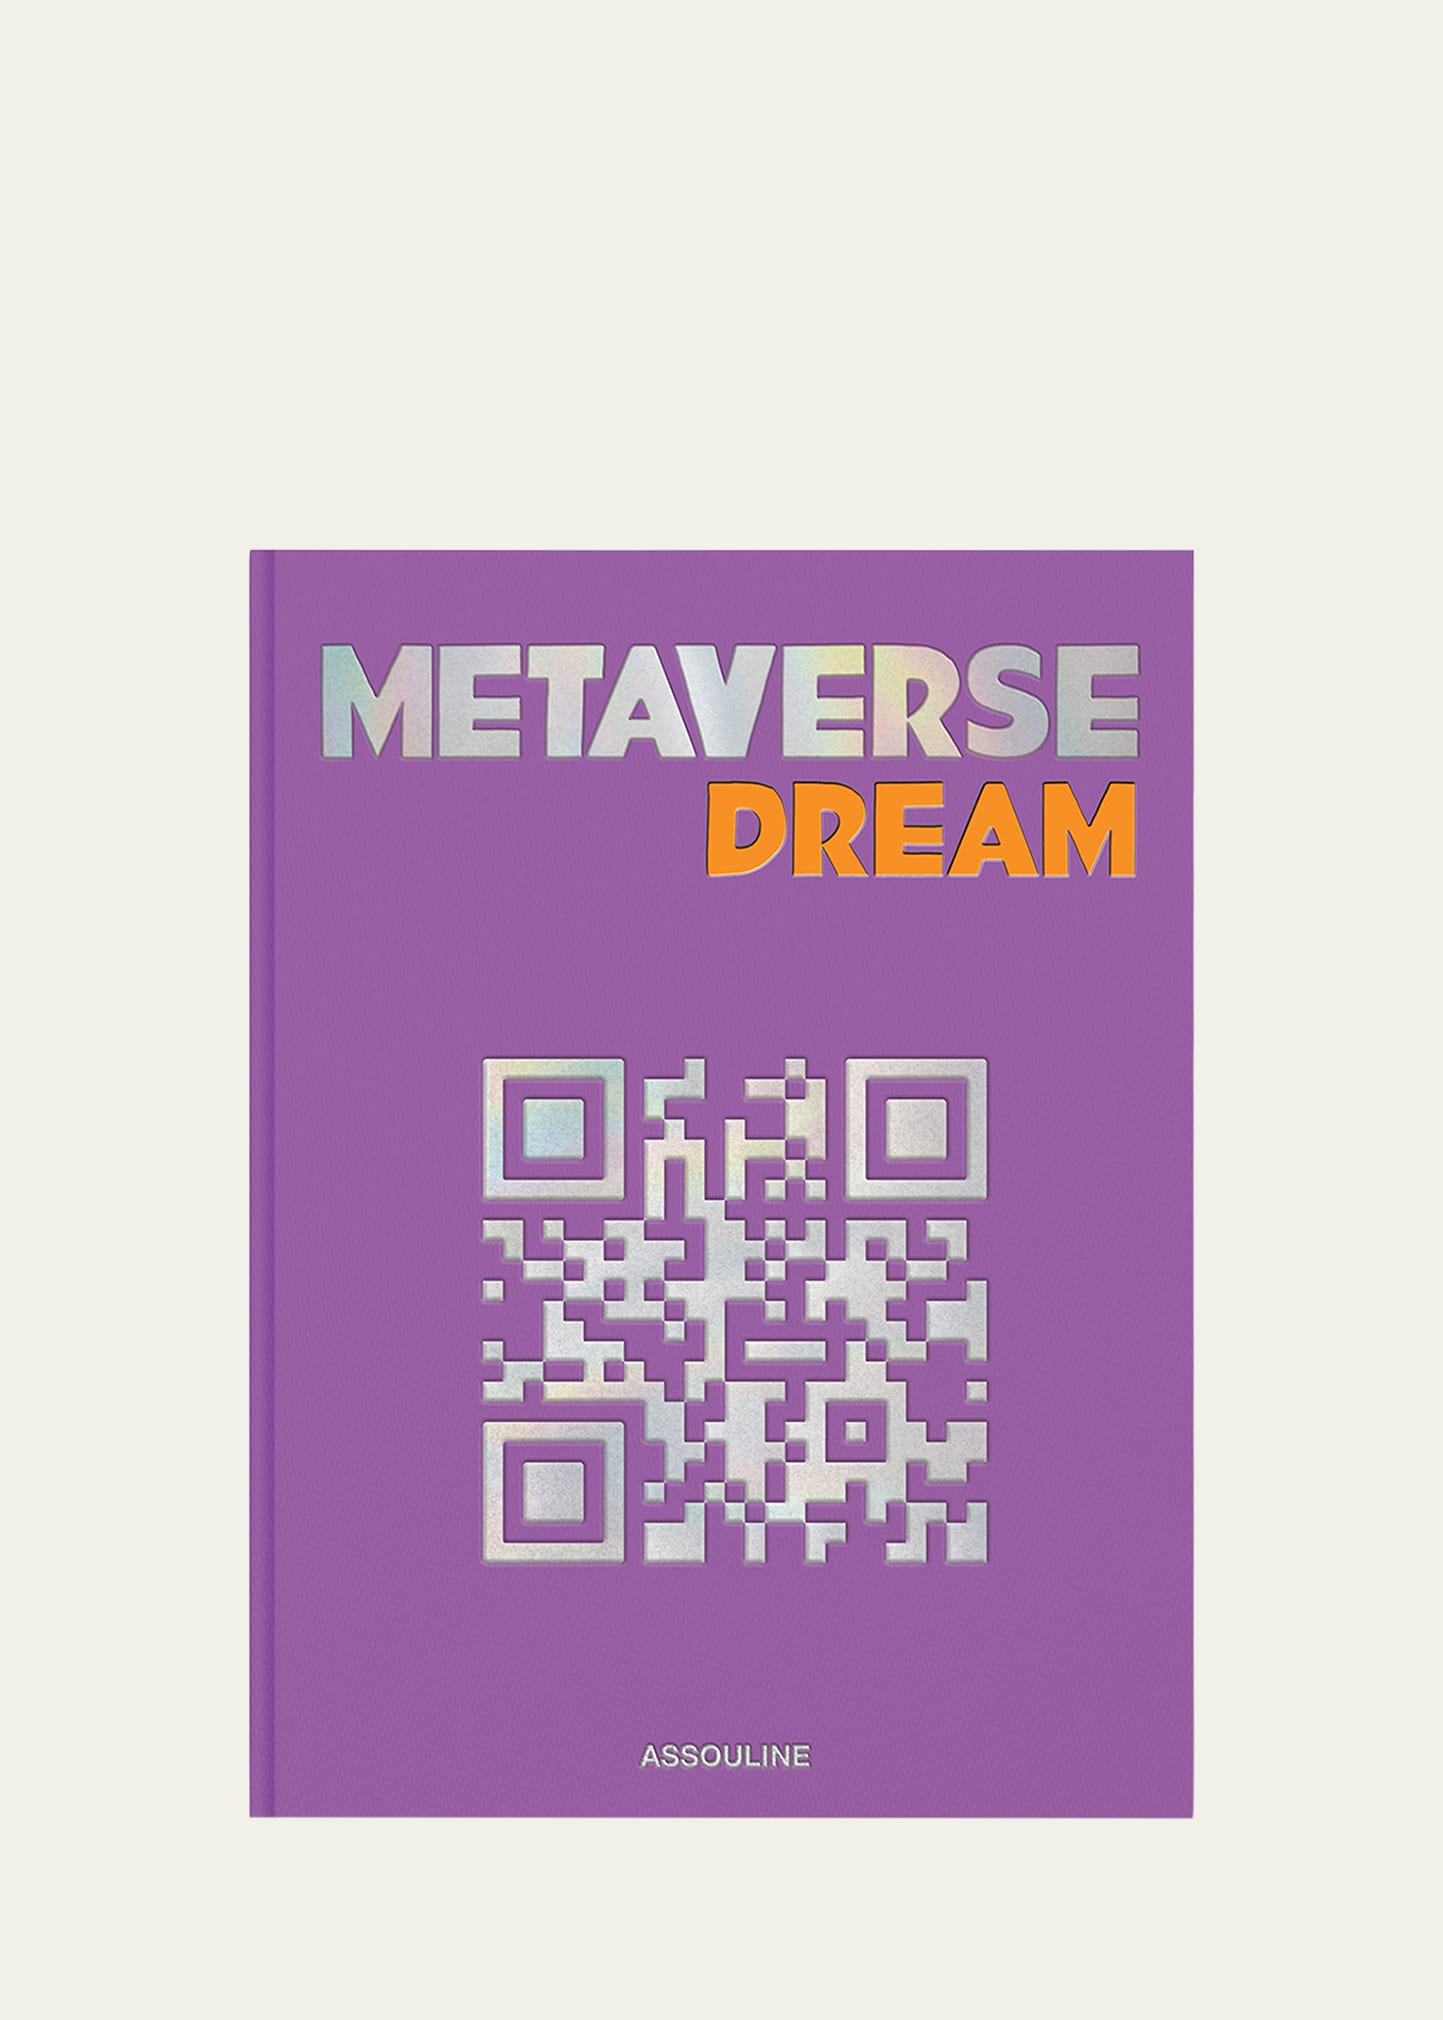 "Metaverse Dream" Book